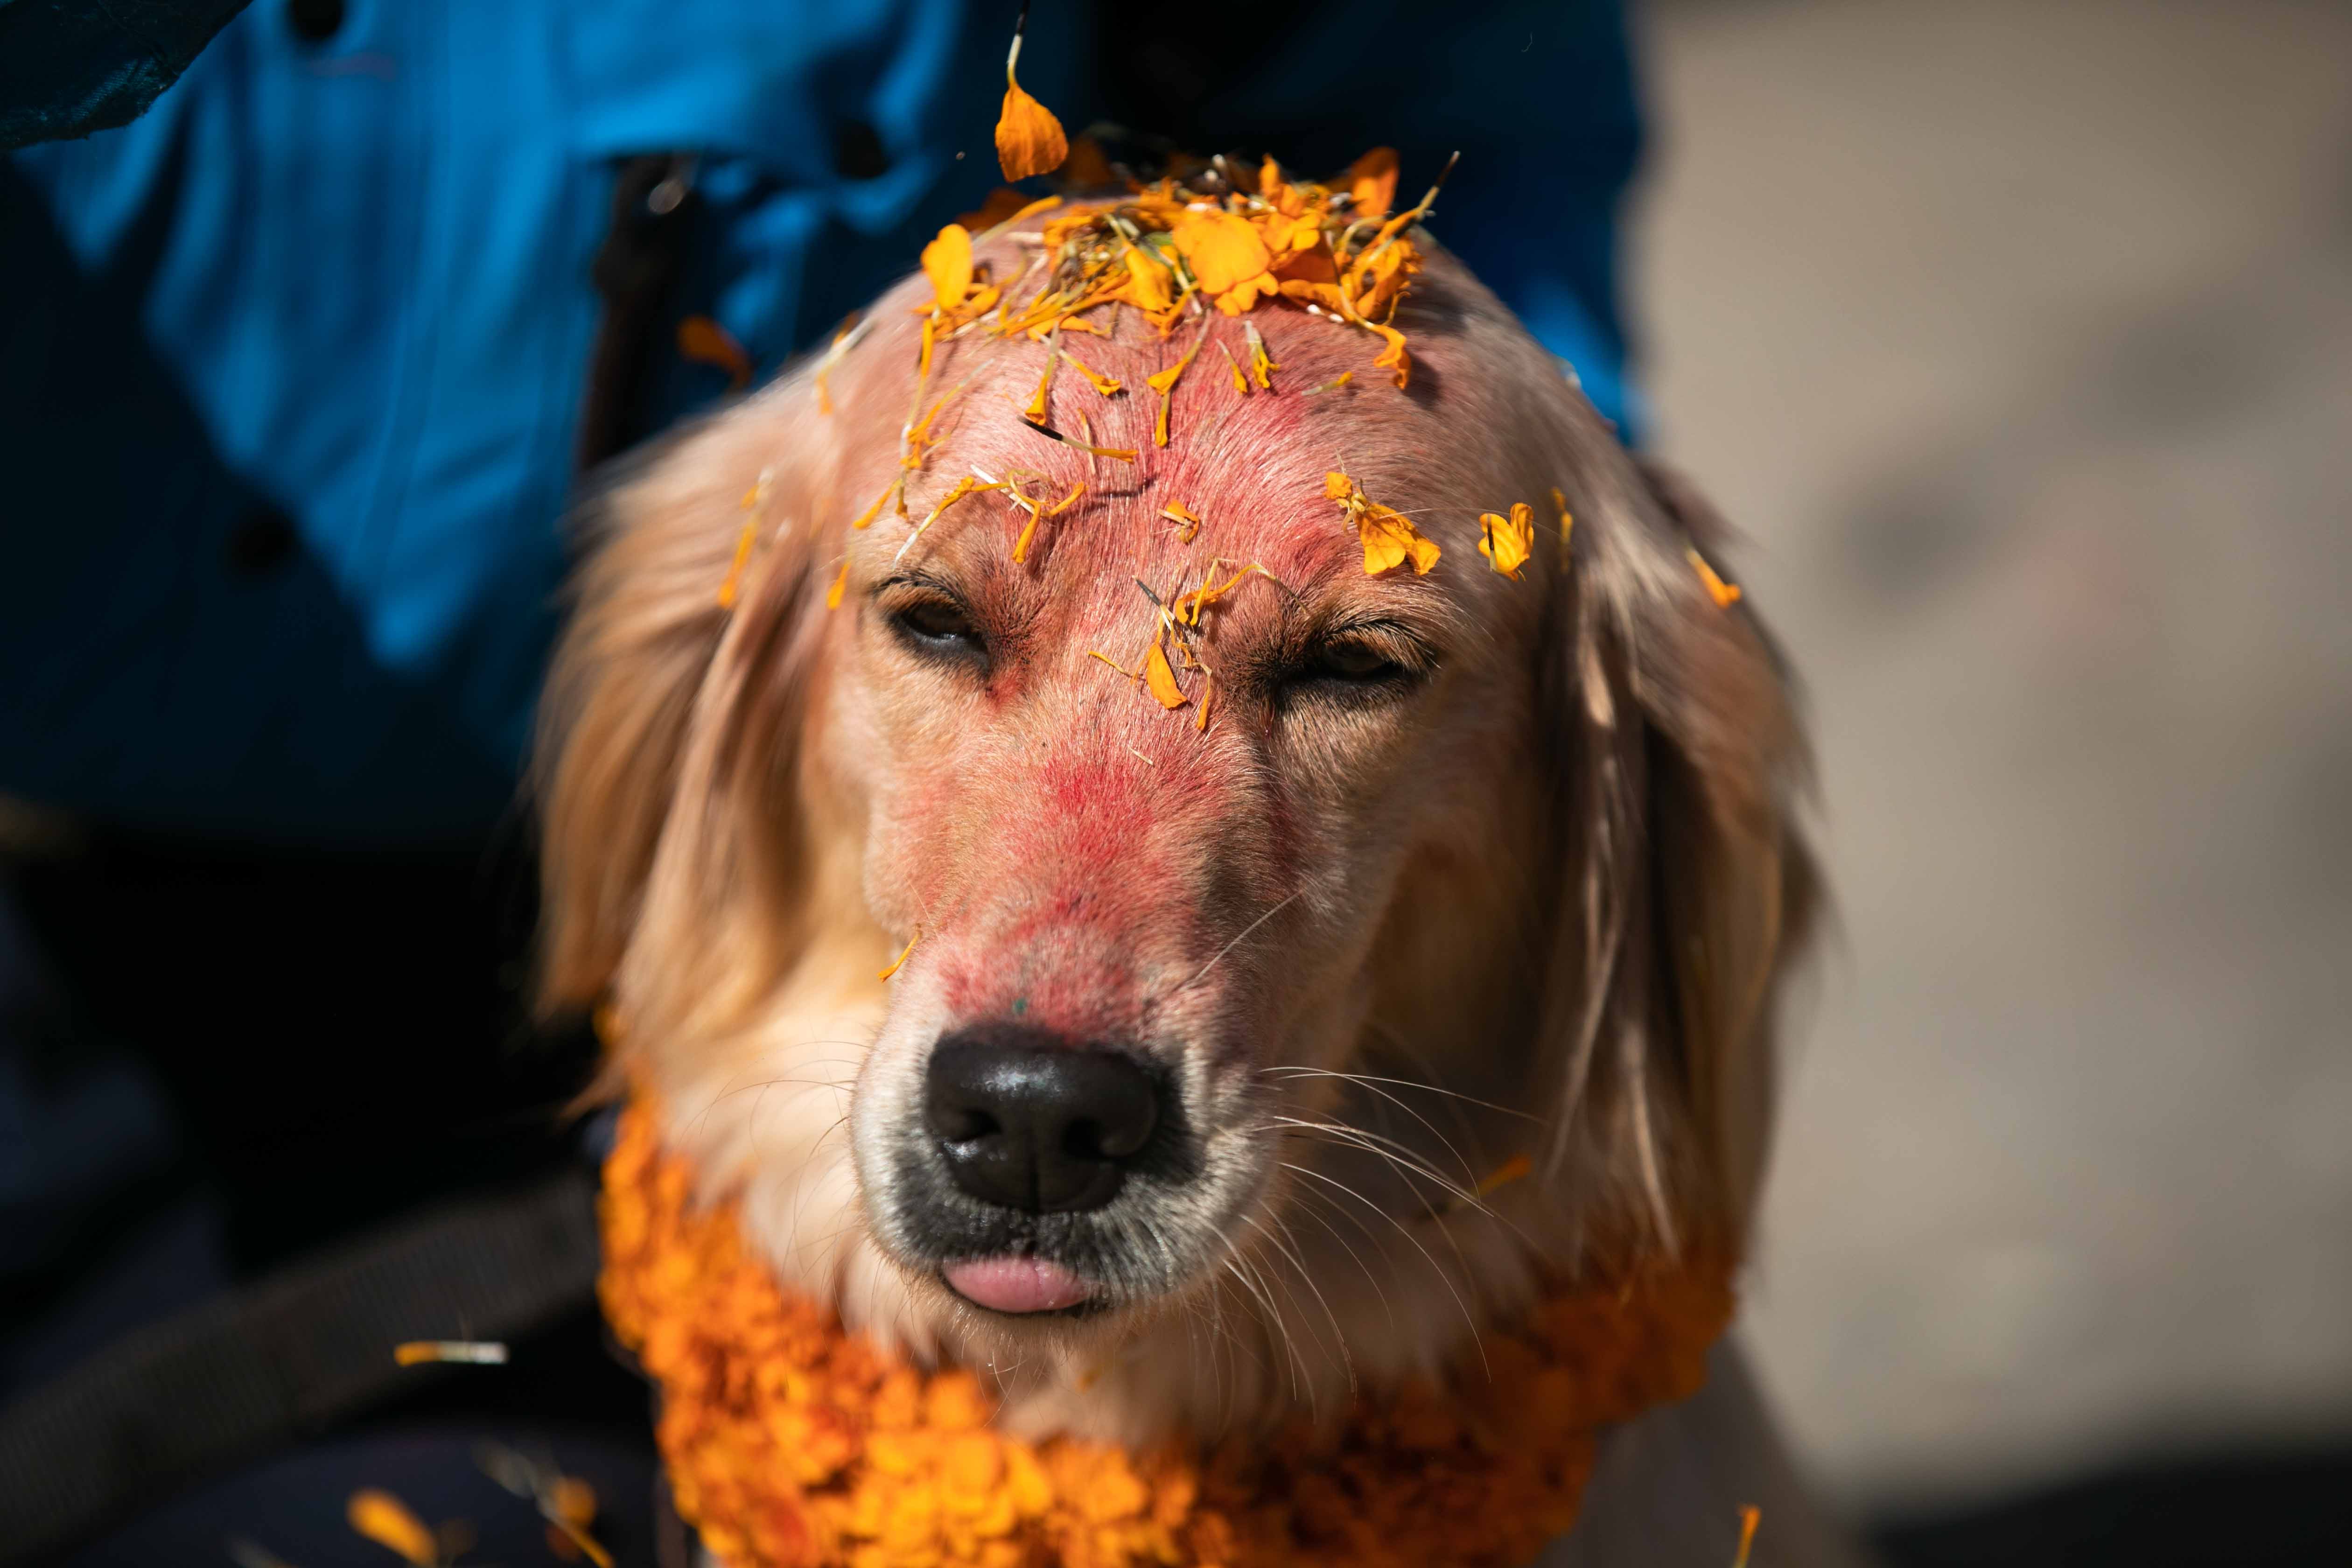 Nepal police dog festival-Nepal Photo Library  (5)1666603822.JPG